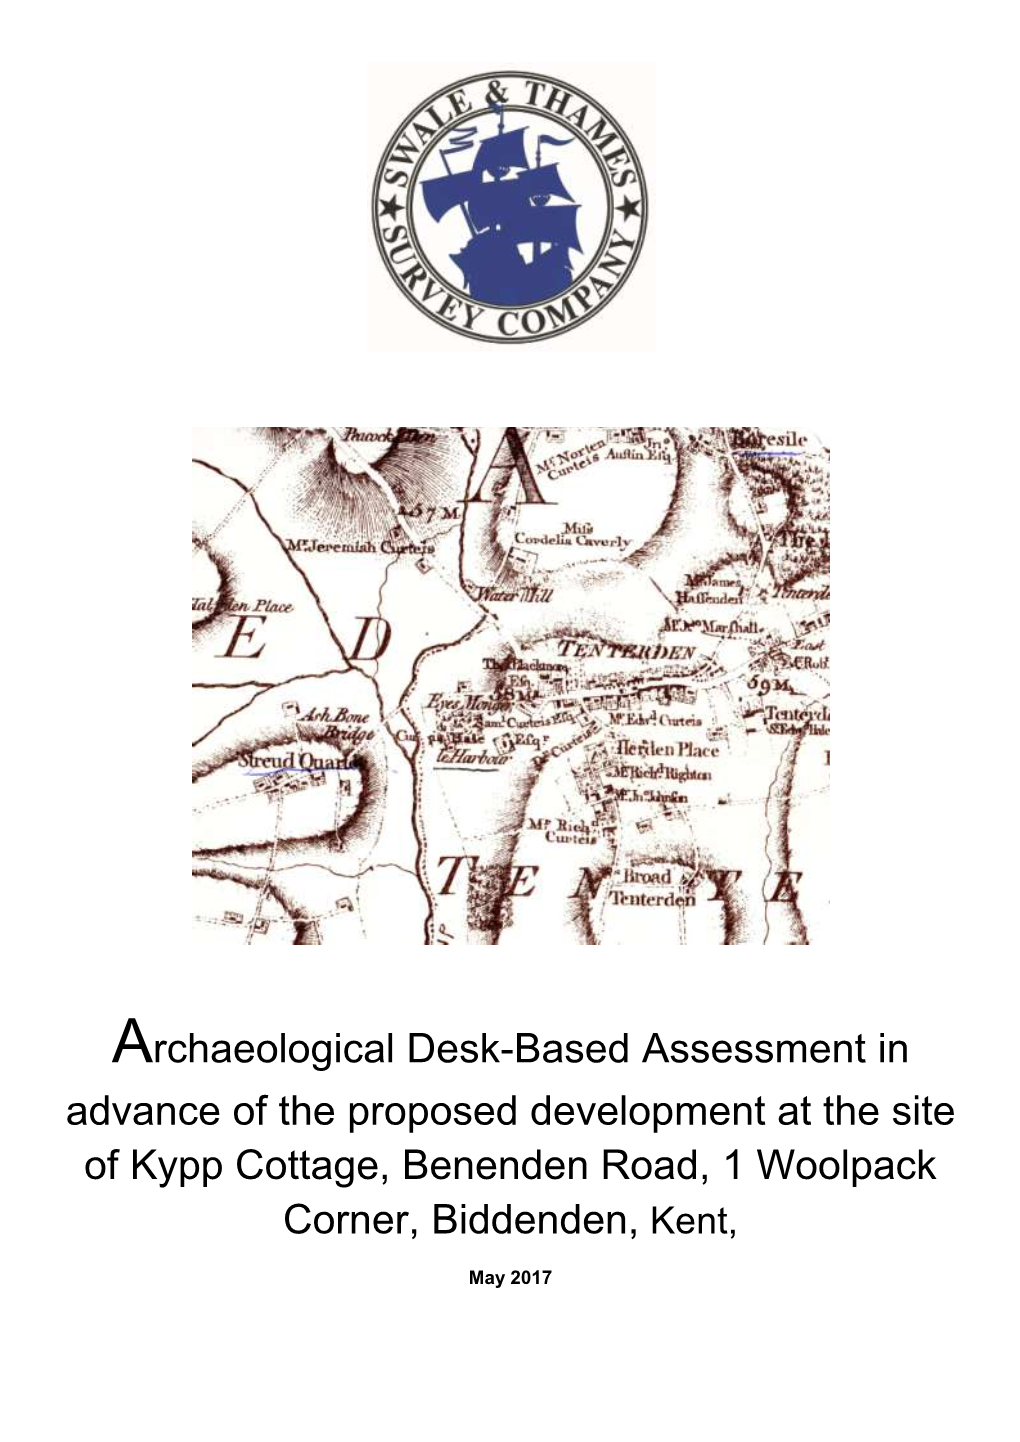 Archaeological Desk-Based Assessment in Advance of the Proposed Development at the Site of Kypp Cottage, Benenden Road, 1 Woolpack Corner, Biddenden, Kent